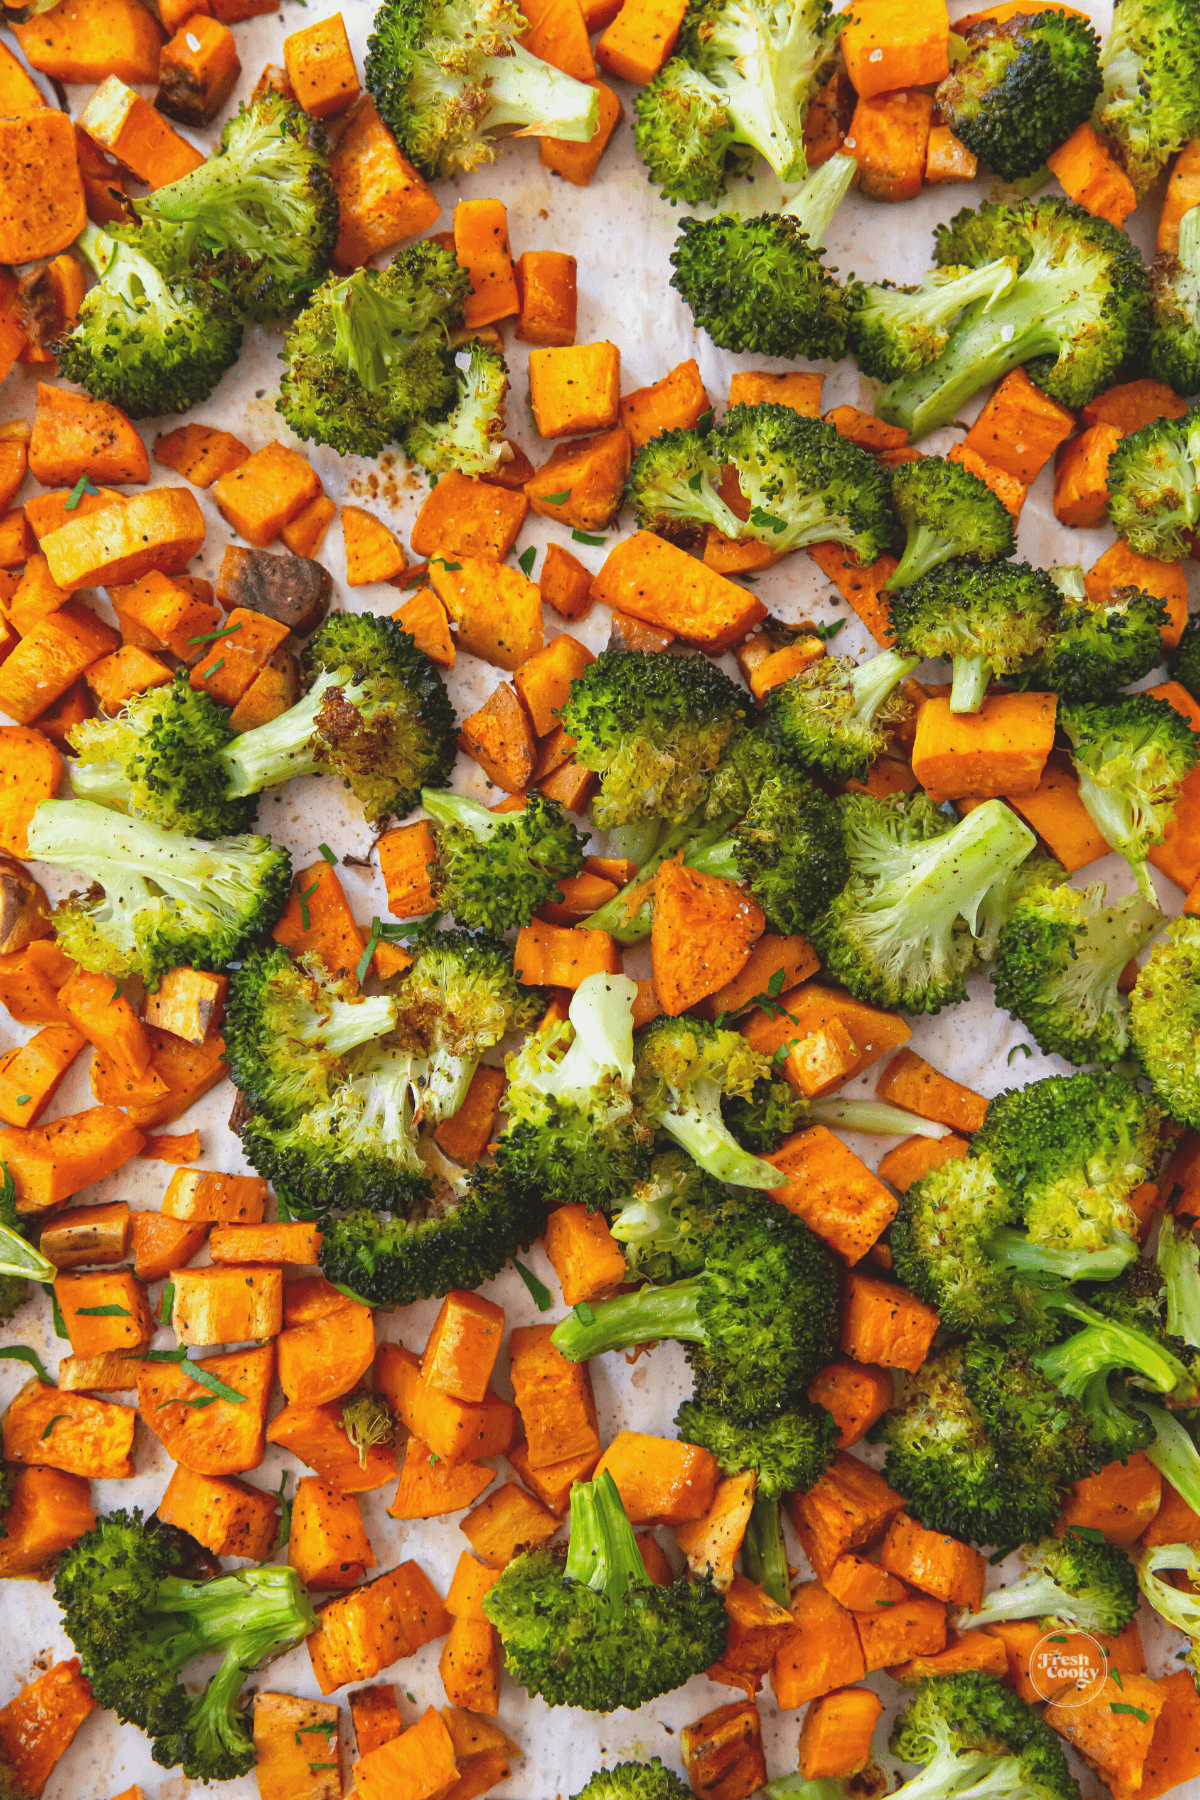 Roasted broccoli and sweet potatoes on baking sheet.